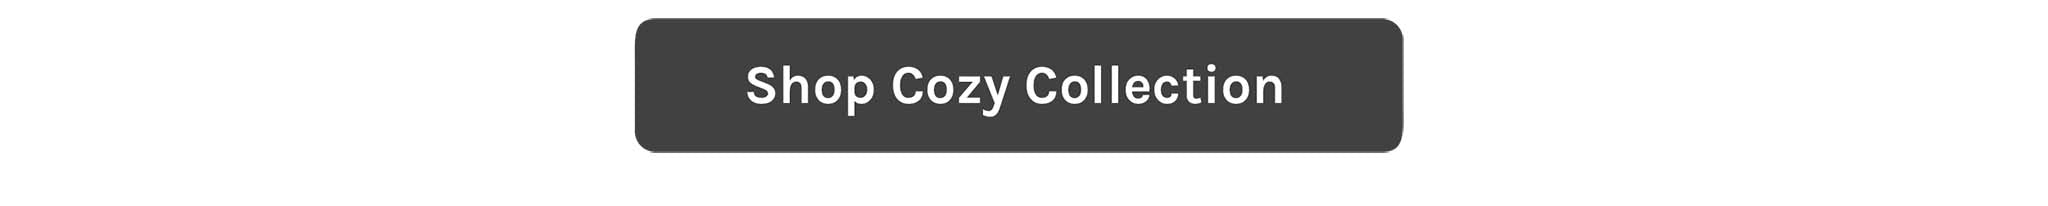 Shop Cozy Collection